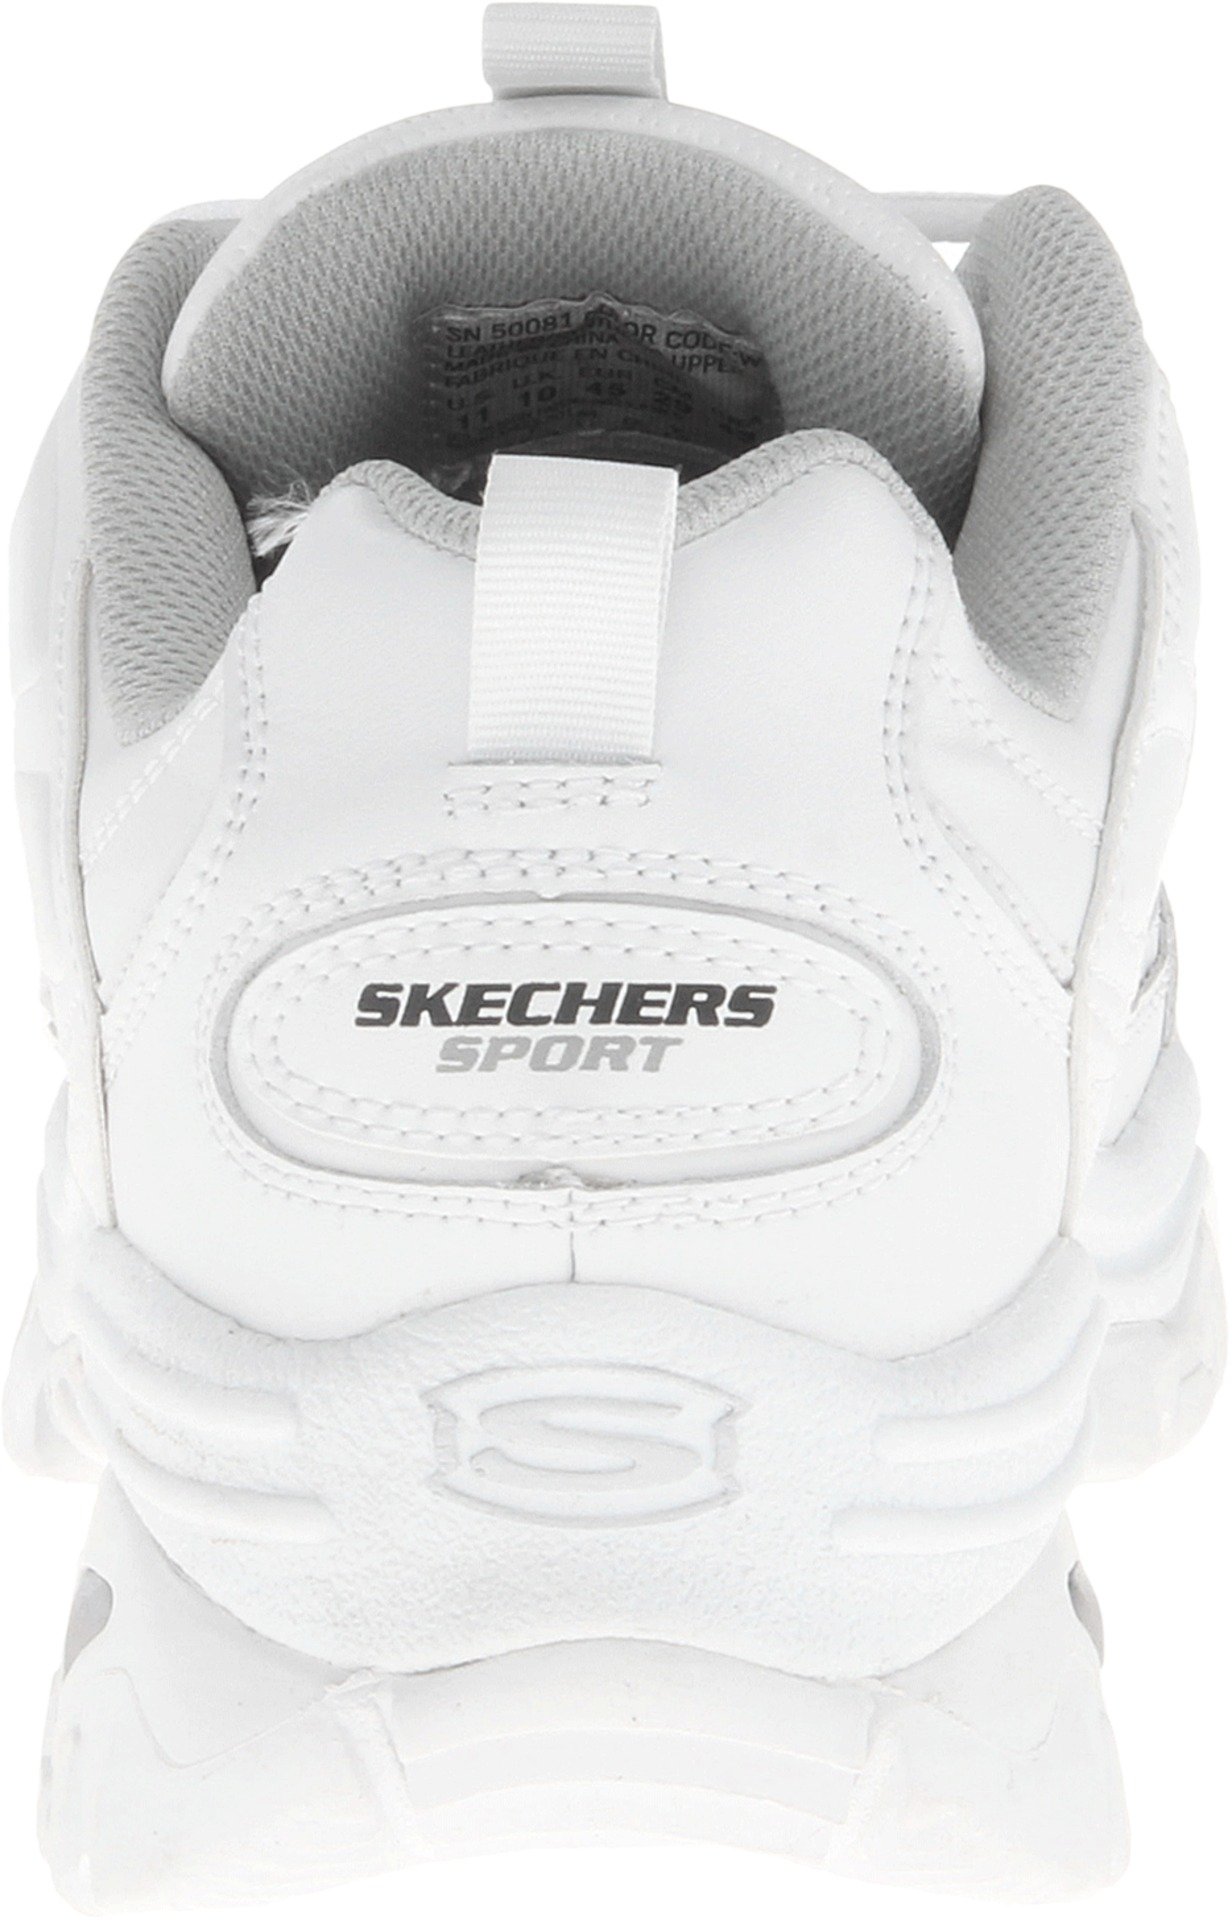 Skechers Men's Energy Afterburn Shoes Lace-Up Sneaker